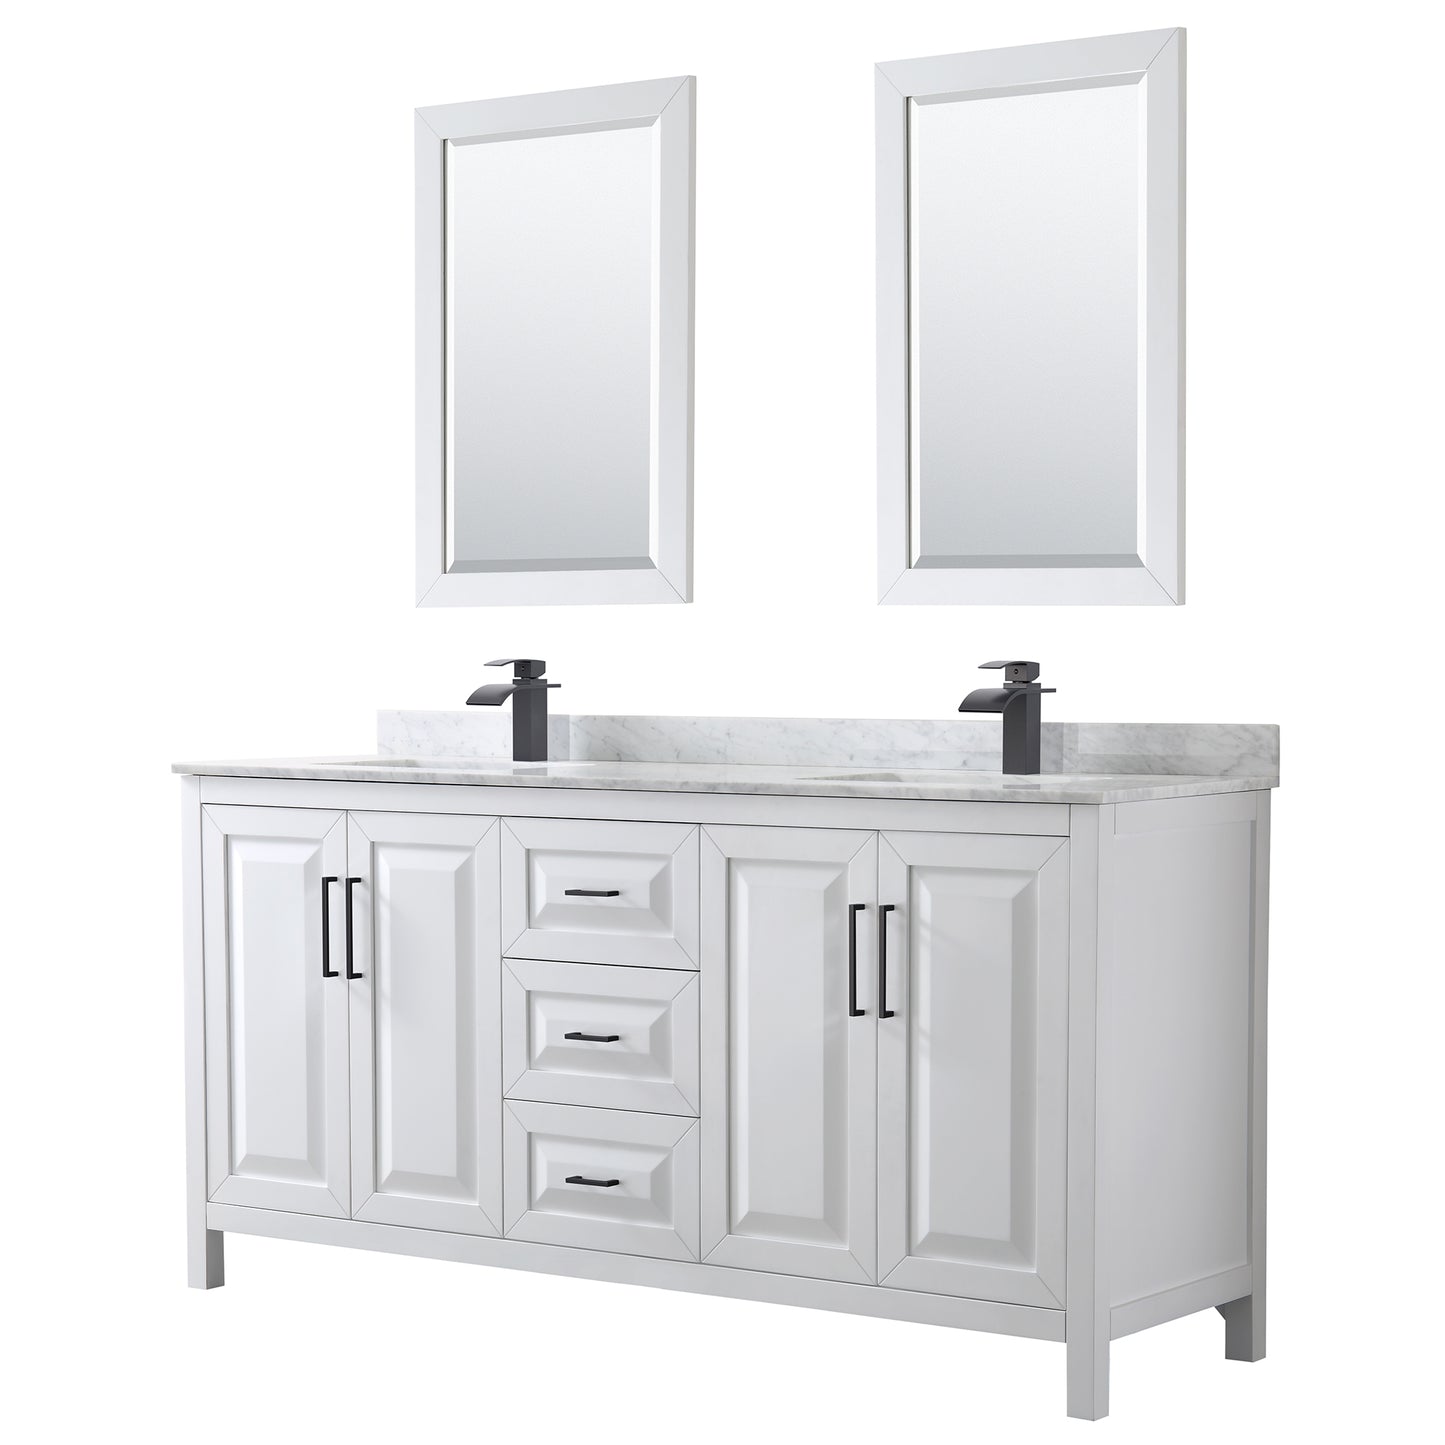 Wyndham Daria 72 Inch Double Bathroom Vanity White Carrara Marble Countertop, Undermount Square Sinks in Matte Black Trim with 24 Inch Mirrors - Luxe Bathroom Vanities